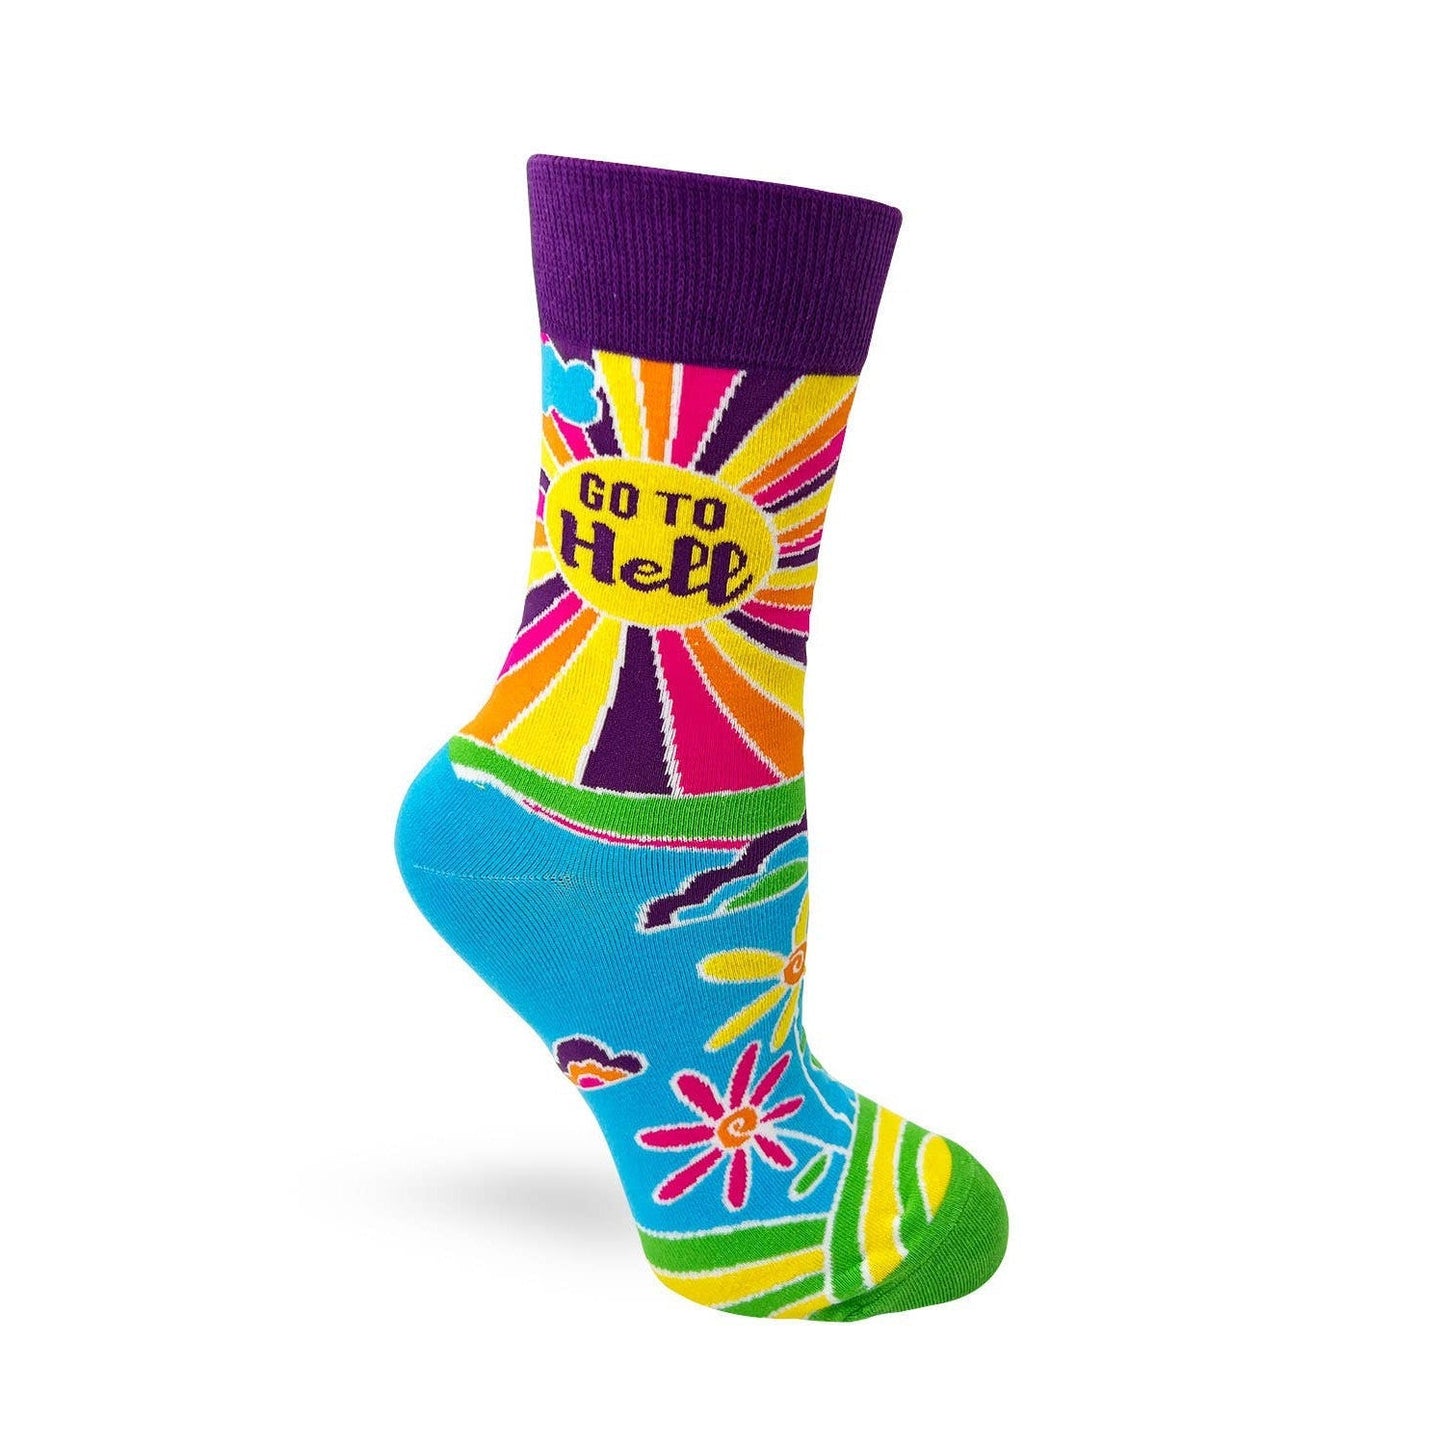 Go To Hell Ladies' Crew Socks in Groovy Rainbow | Women's Novelty Colorful Socks